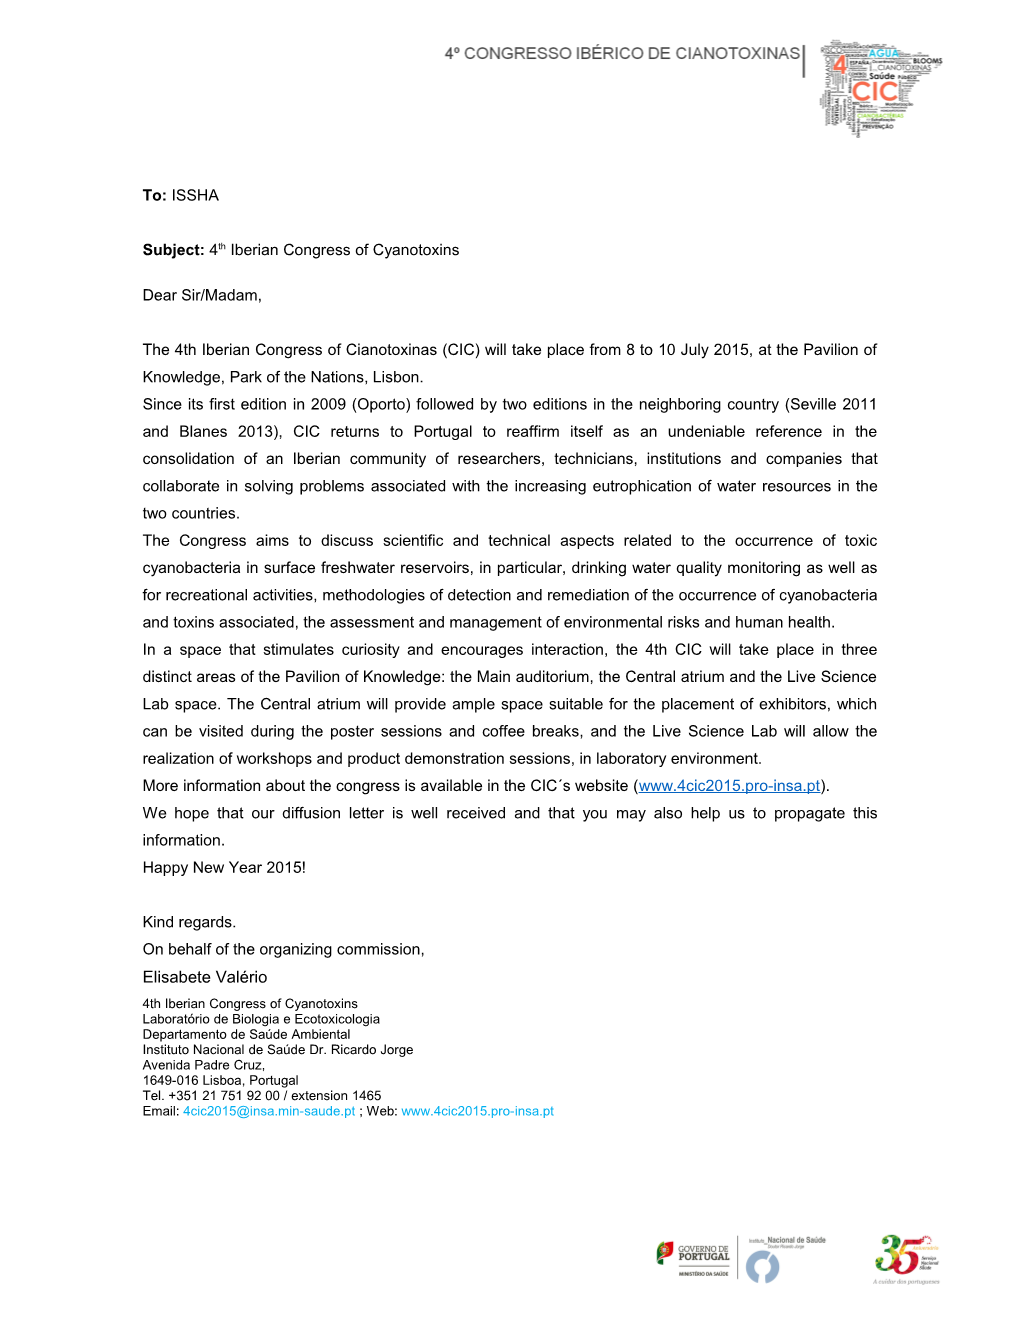 Subject: 4Th Iberian Congress of Cyanotoxins